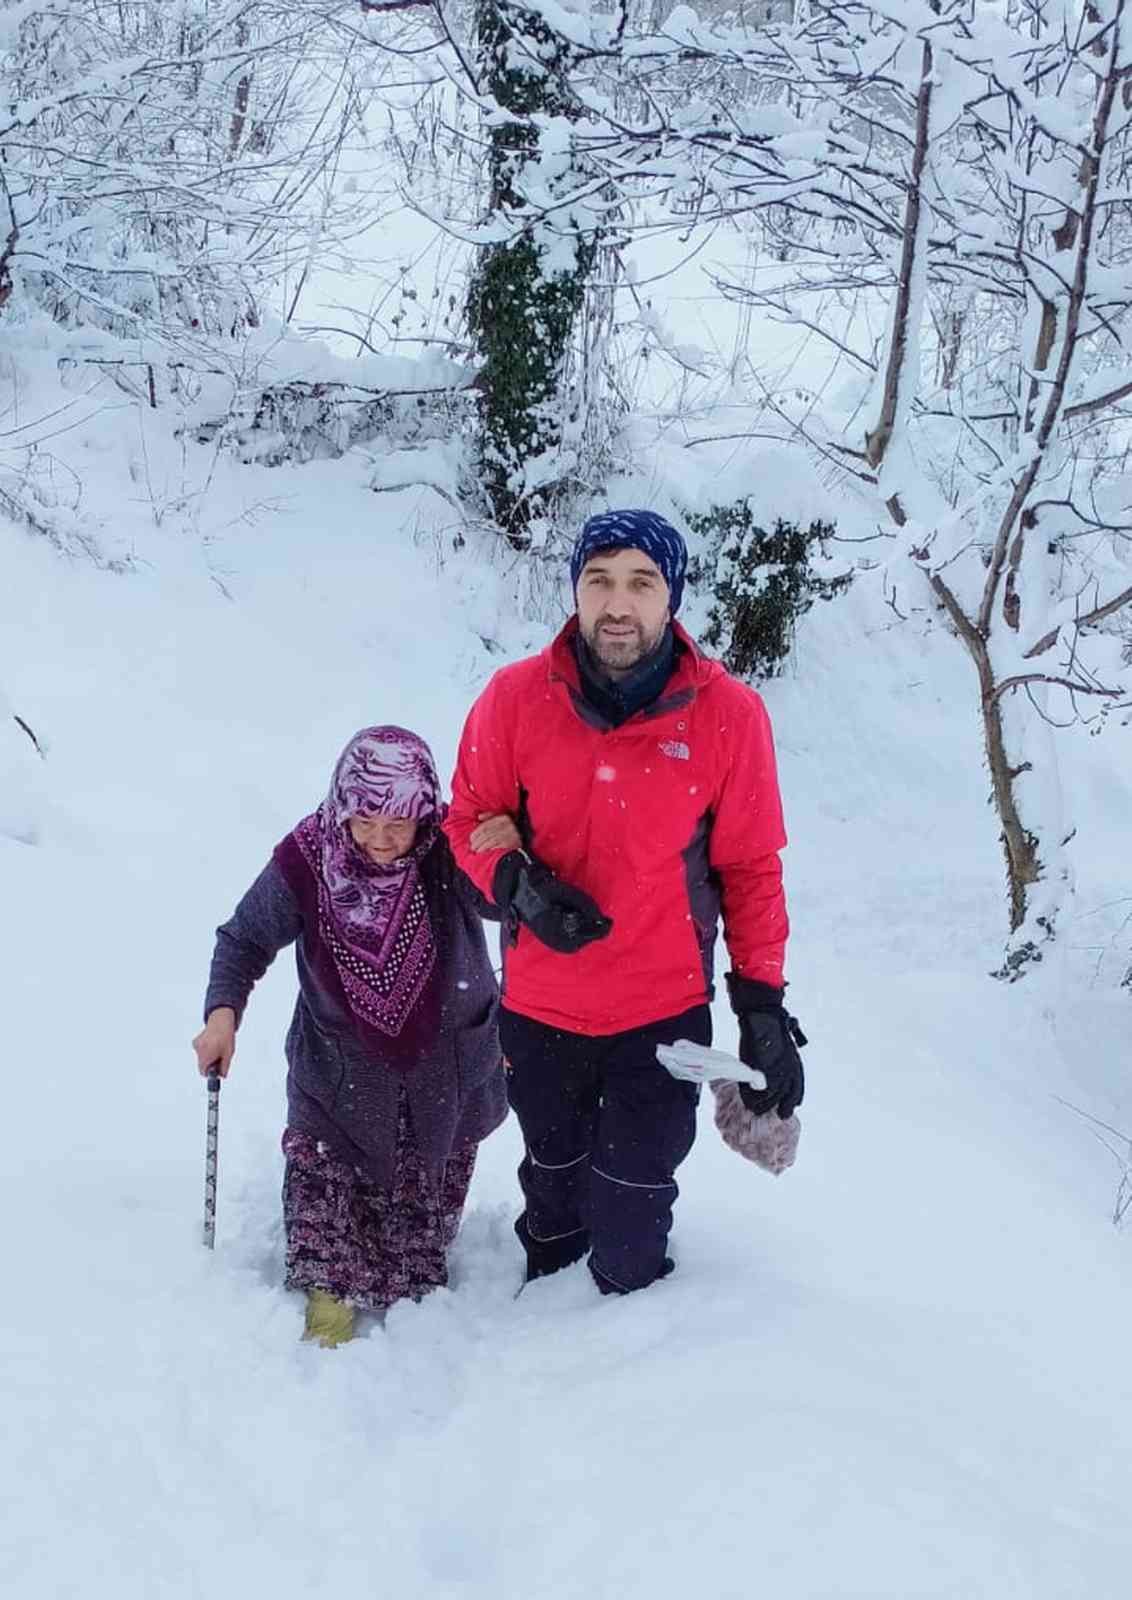 Karda mahsur kalan yaşlı kadının yardımına AFAD yetişti #samsun